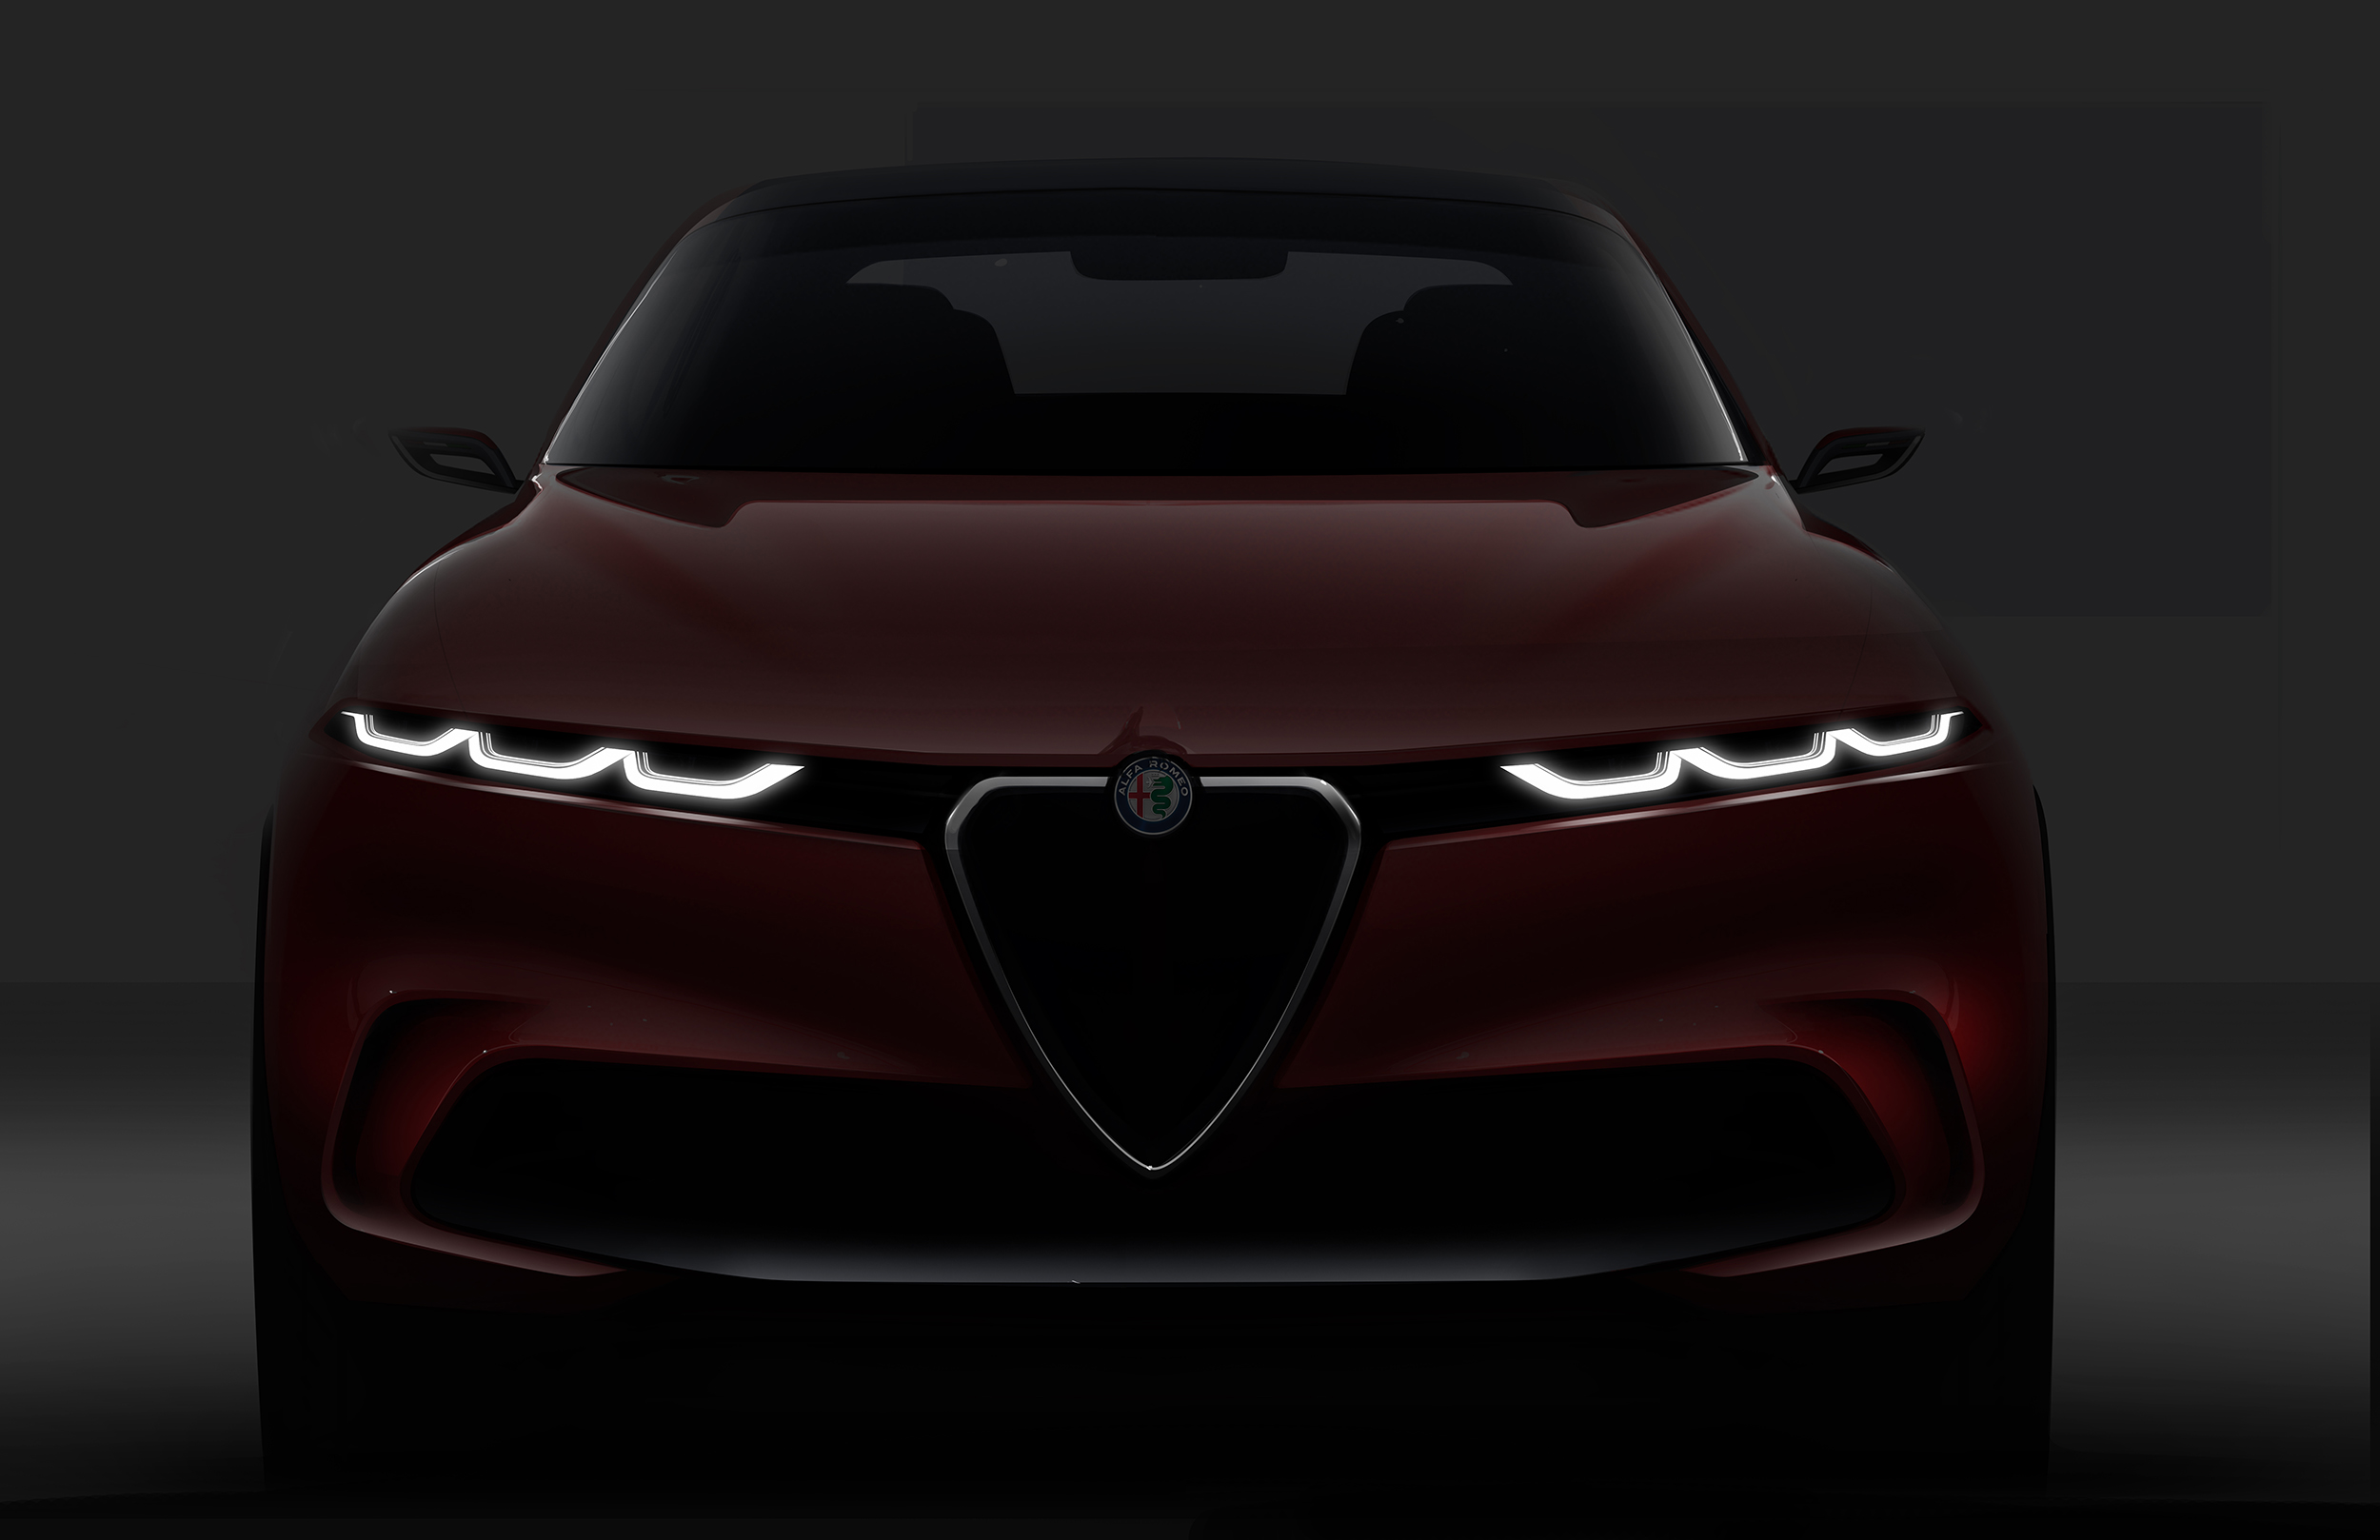 Alfa Romeo confirms all-electric plans for 2027 - EV Central